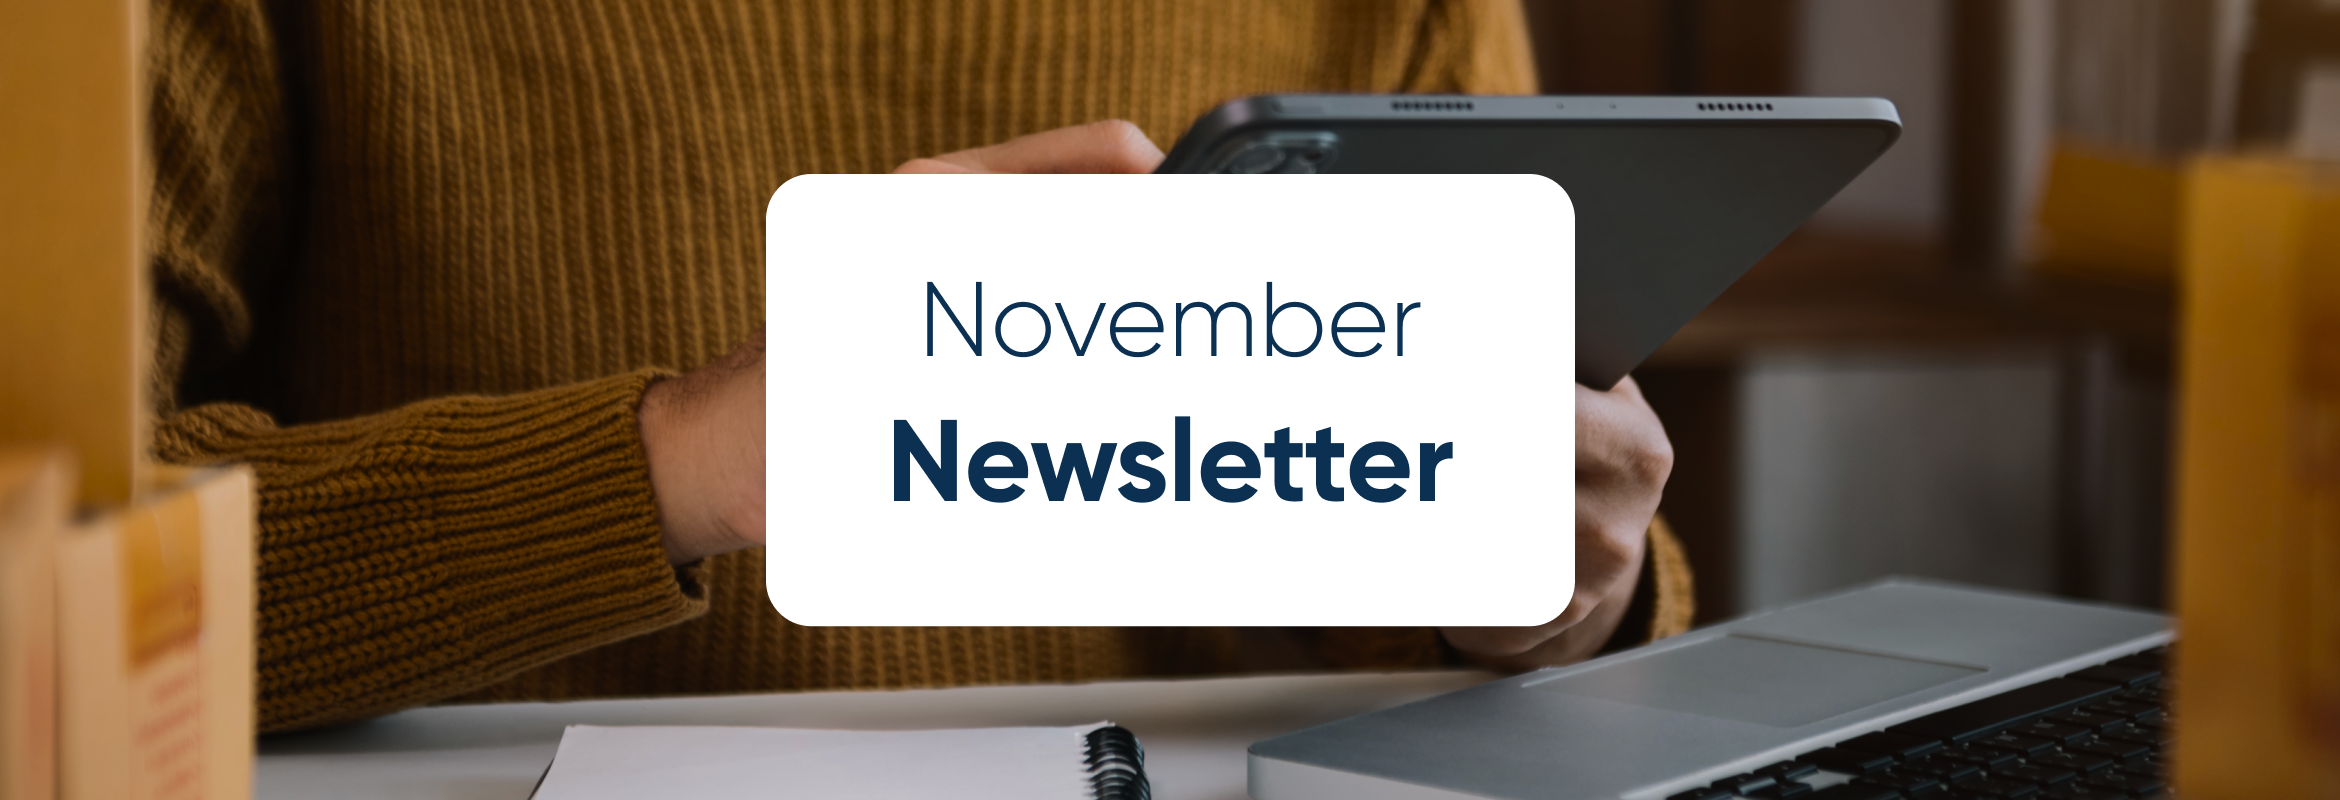 November Newsletter SimplyMeet.me